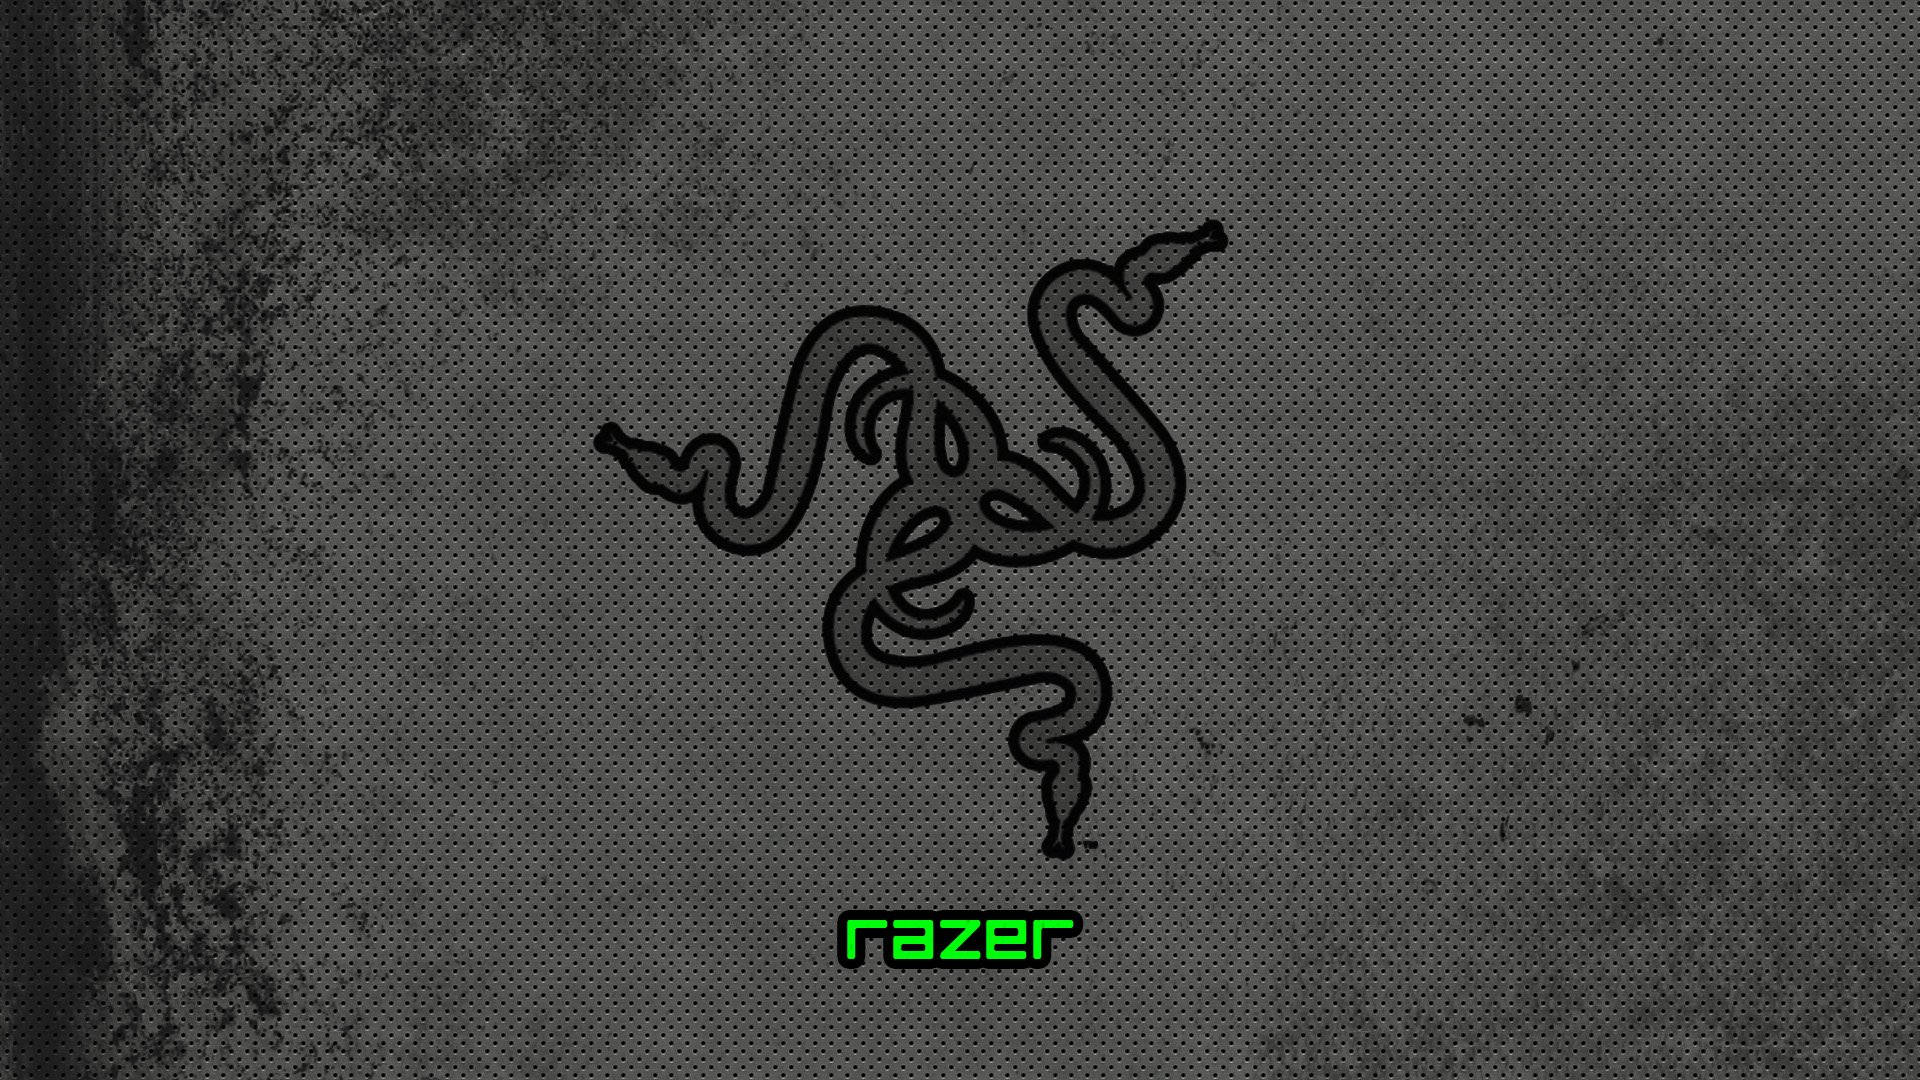 Grayscale Dotted Razer Pc Logo Wallpaper